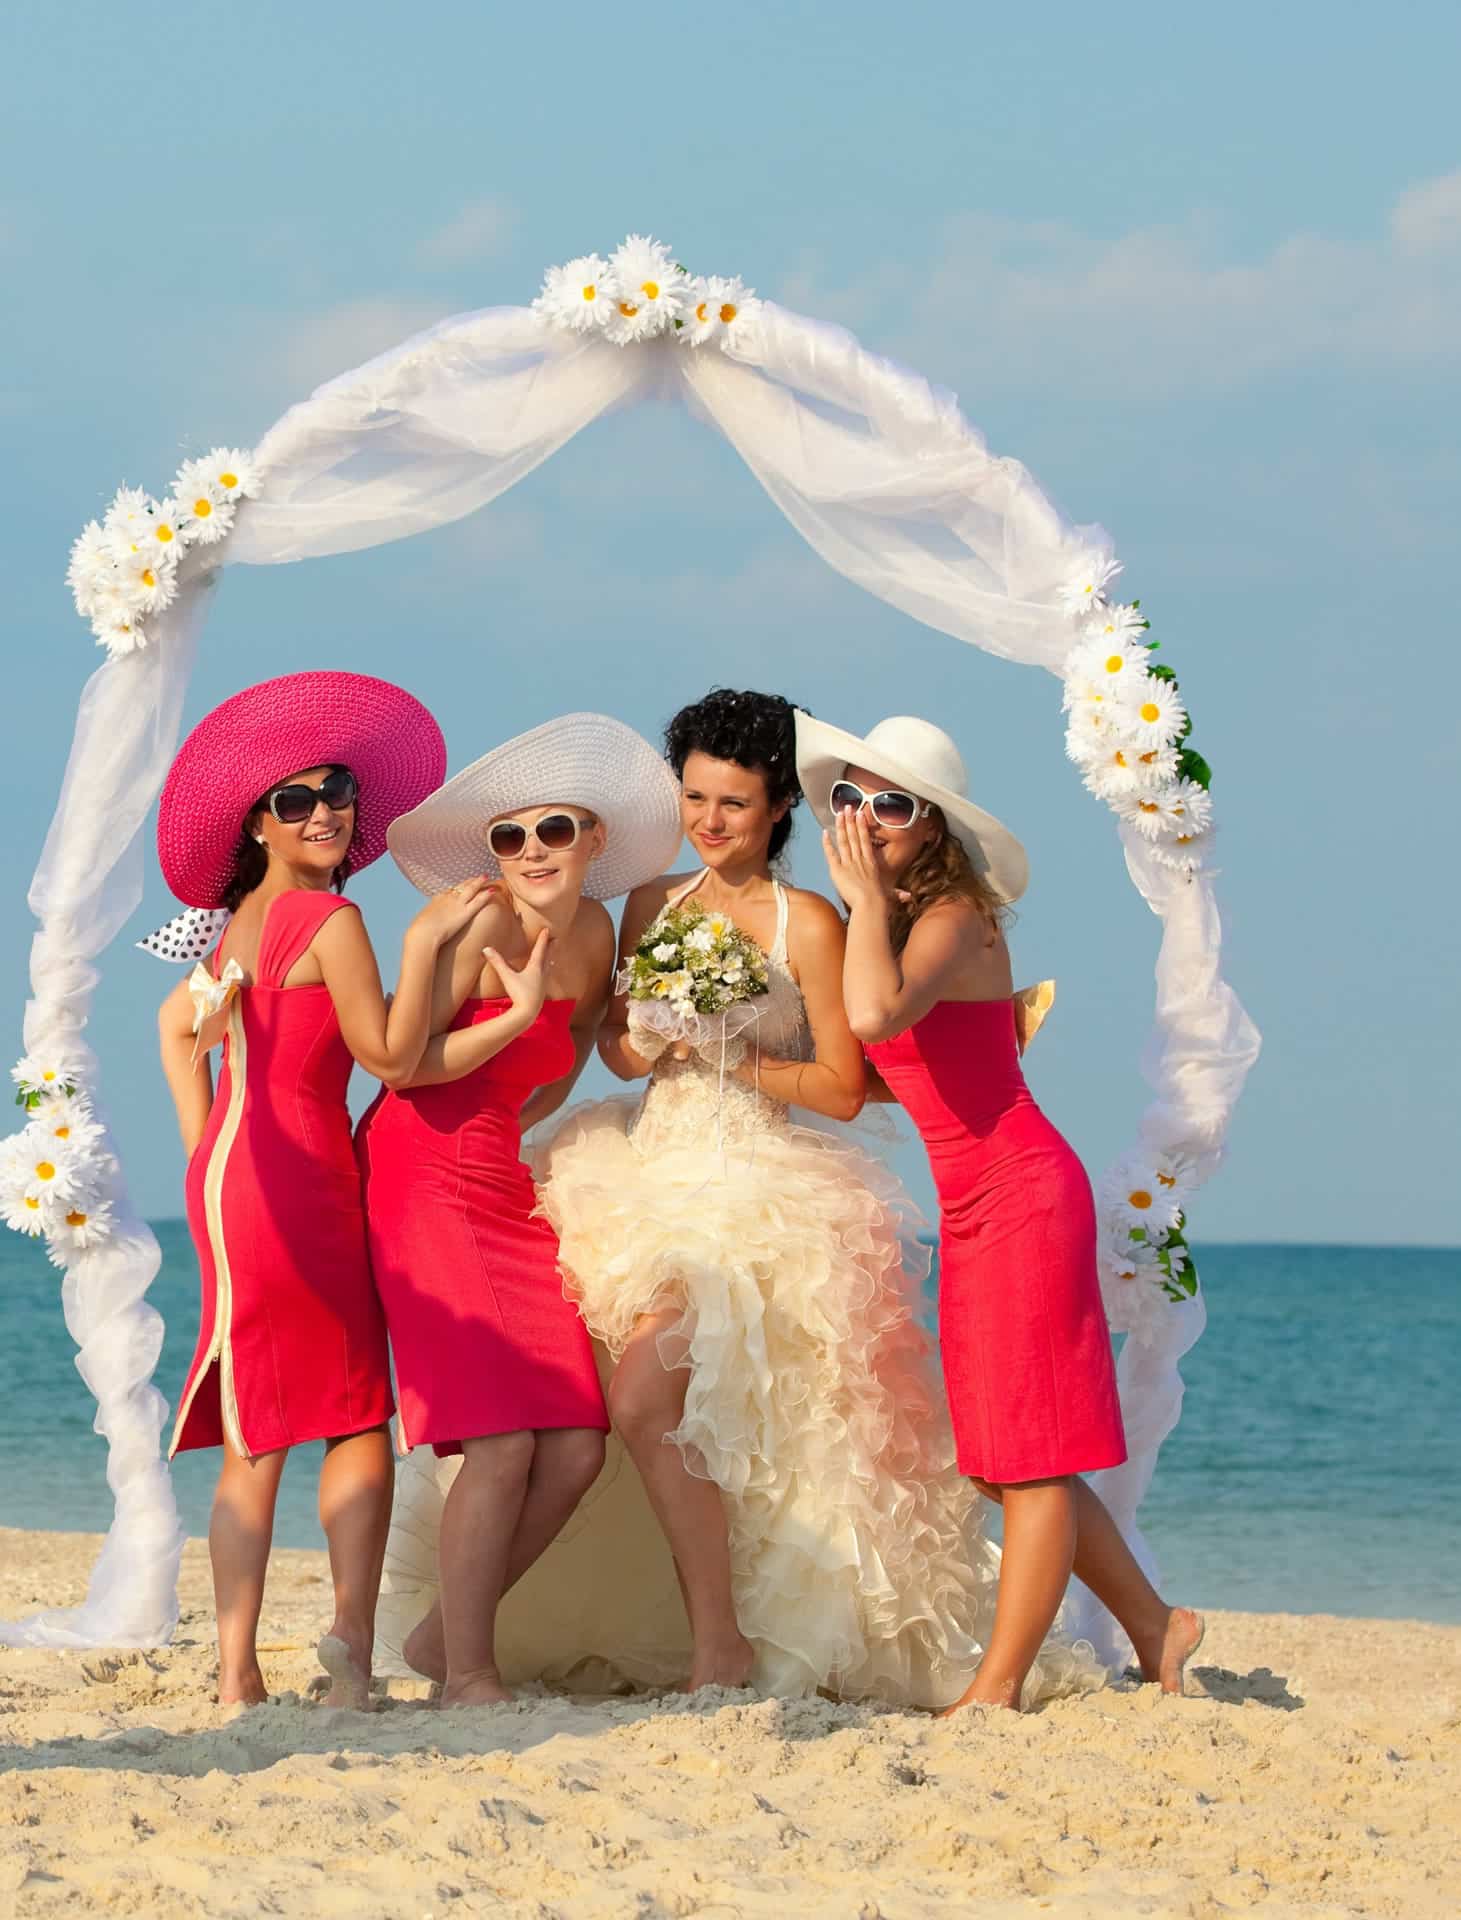 Weddings in Spain - Foreigners getting married in Costa del Sol